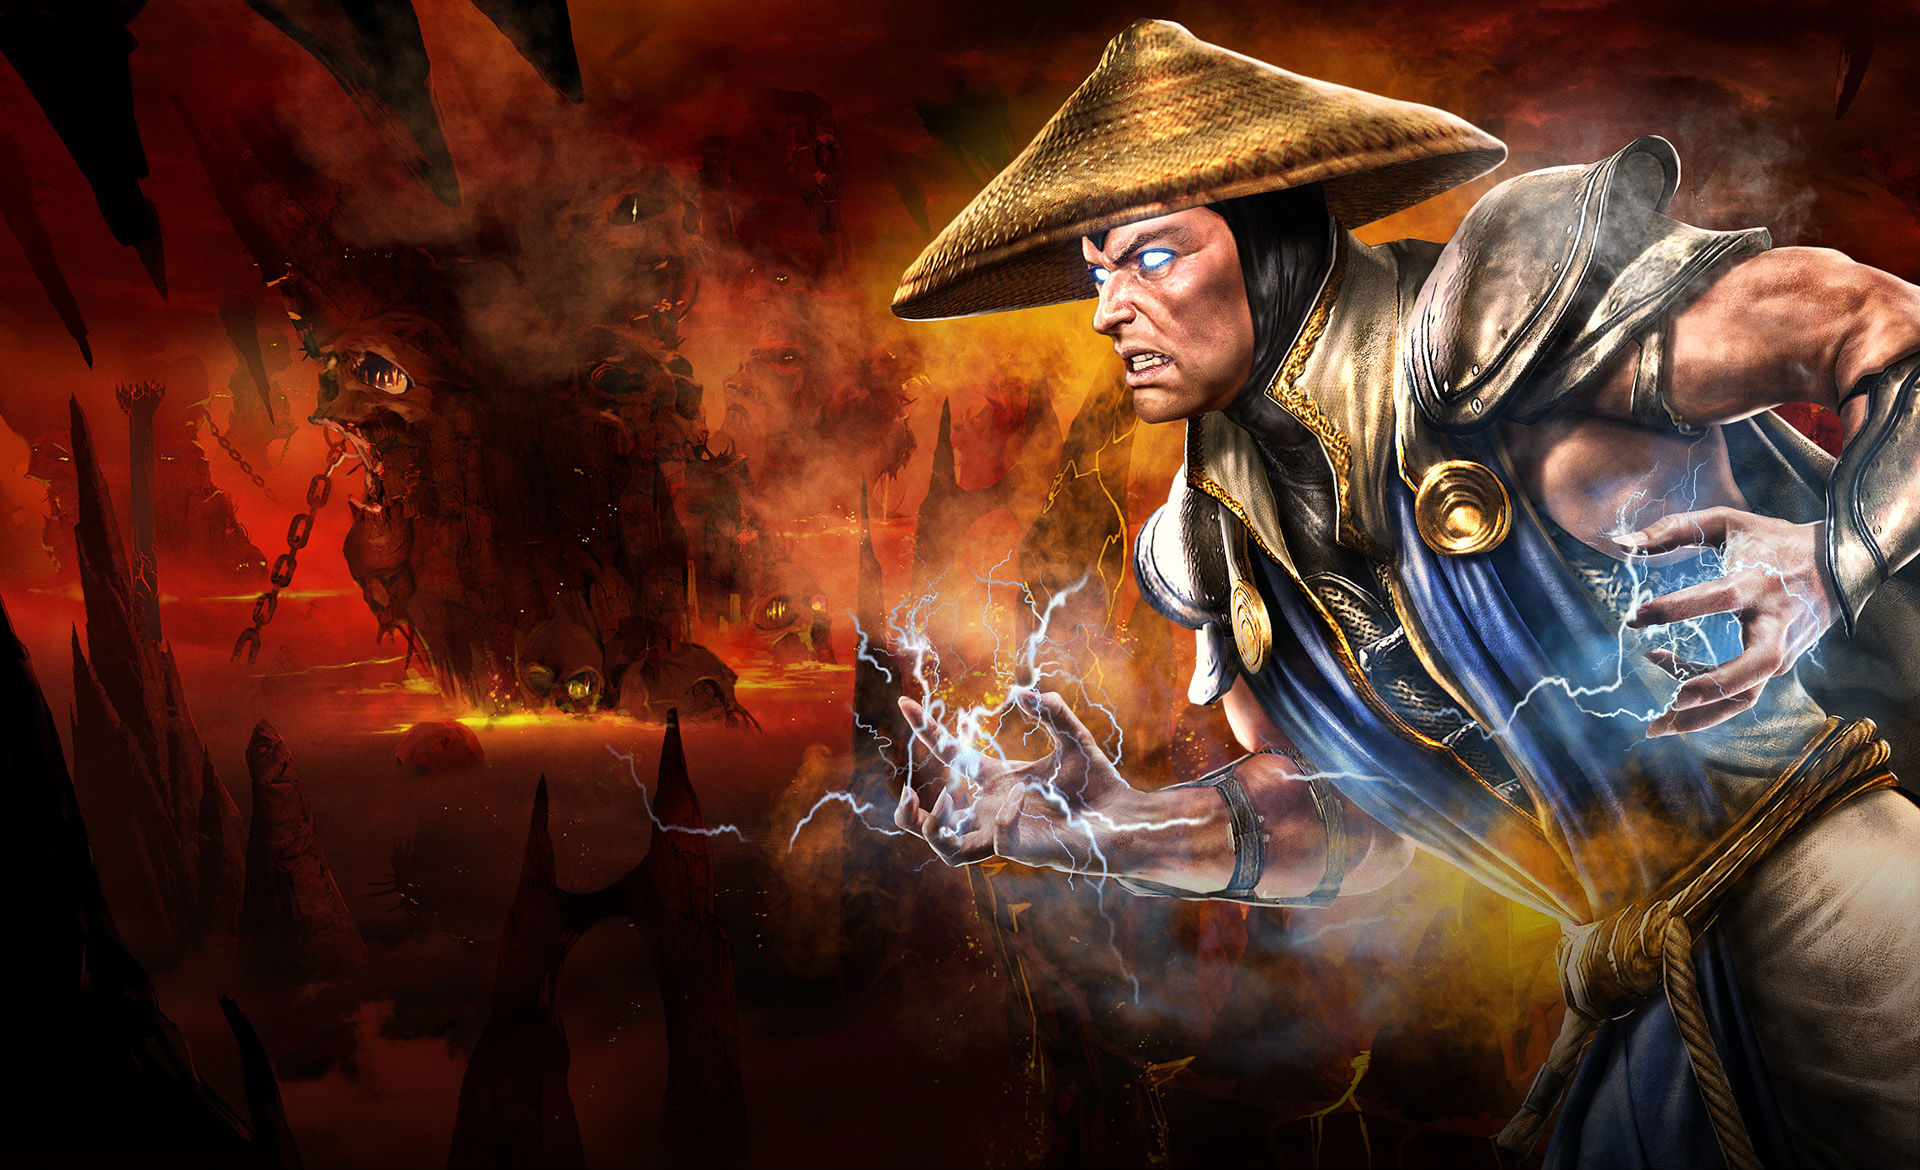 Mortal Kombat Raiden character in high-definition desktop wallpaper